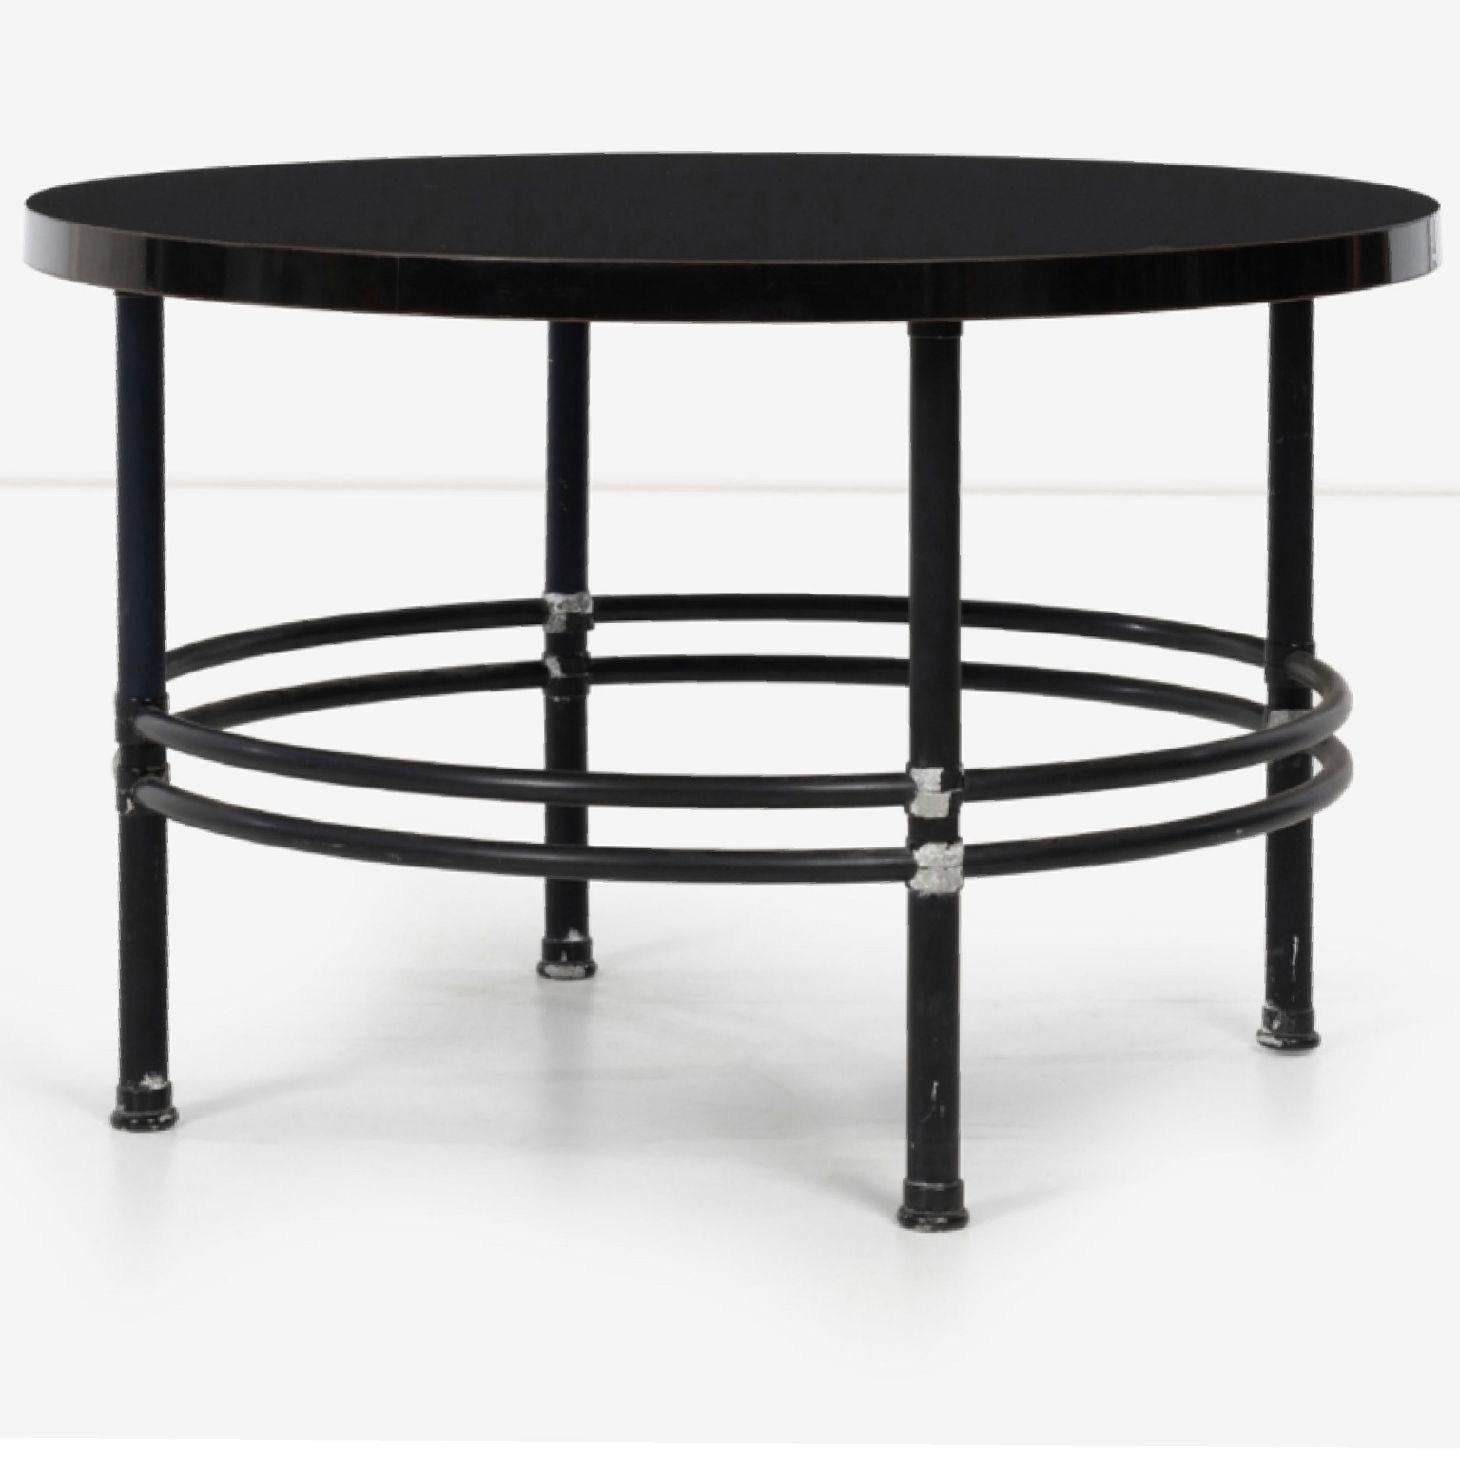 Warren McArthur Streamline Modern Aluminum Black Coffee Table Model 1559-s 1930s For Sale 4